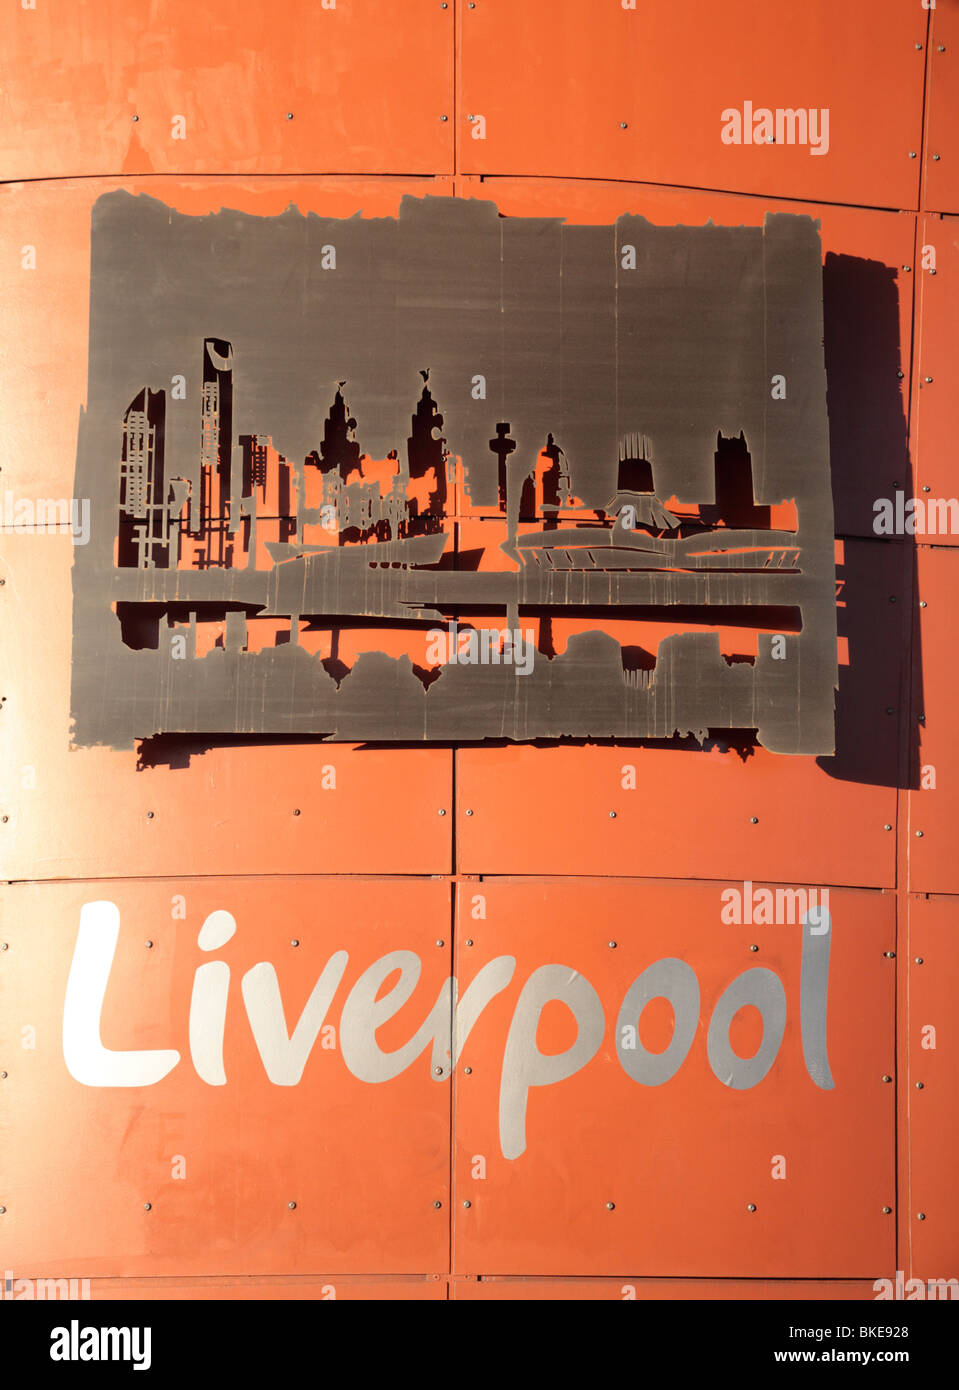 Liverpool sign Stock Photo